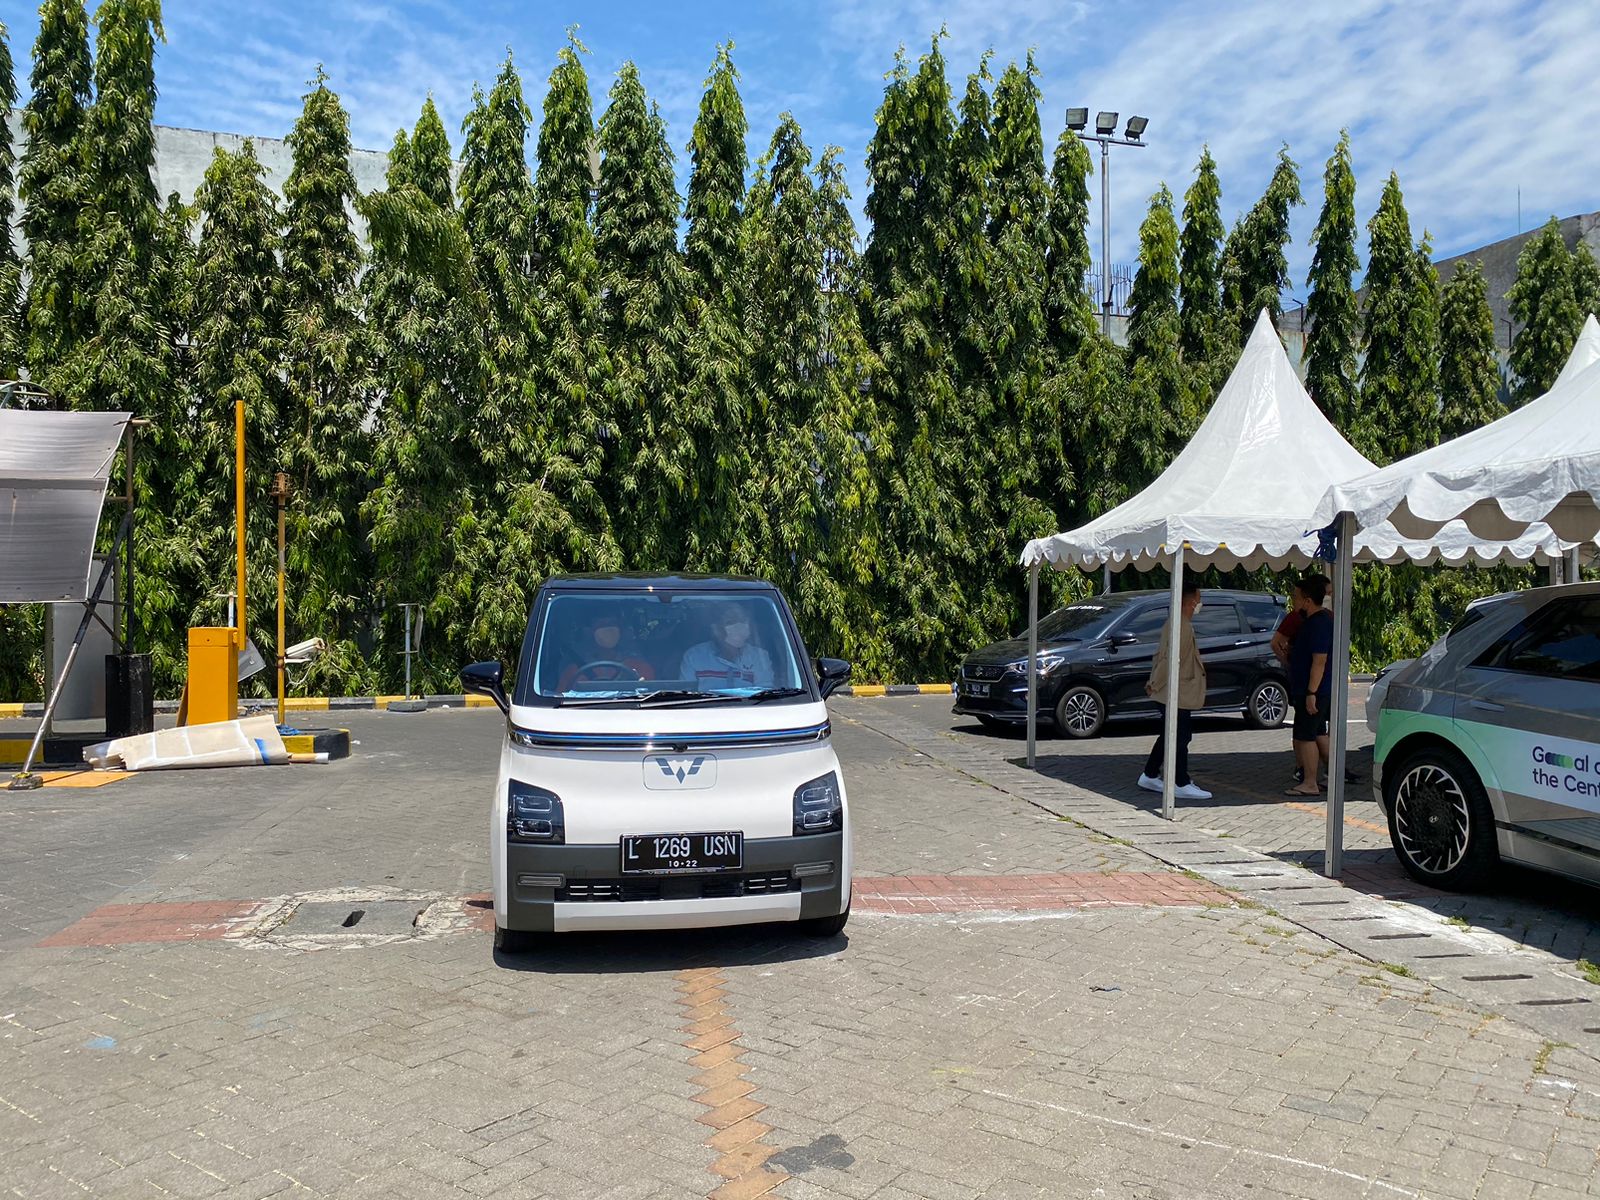 Dihadiri Lebih dari 30 Ribu Pengunjung, GIIAS Surabaya 2022 Jadi Contoh Green Mobility